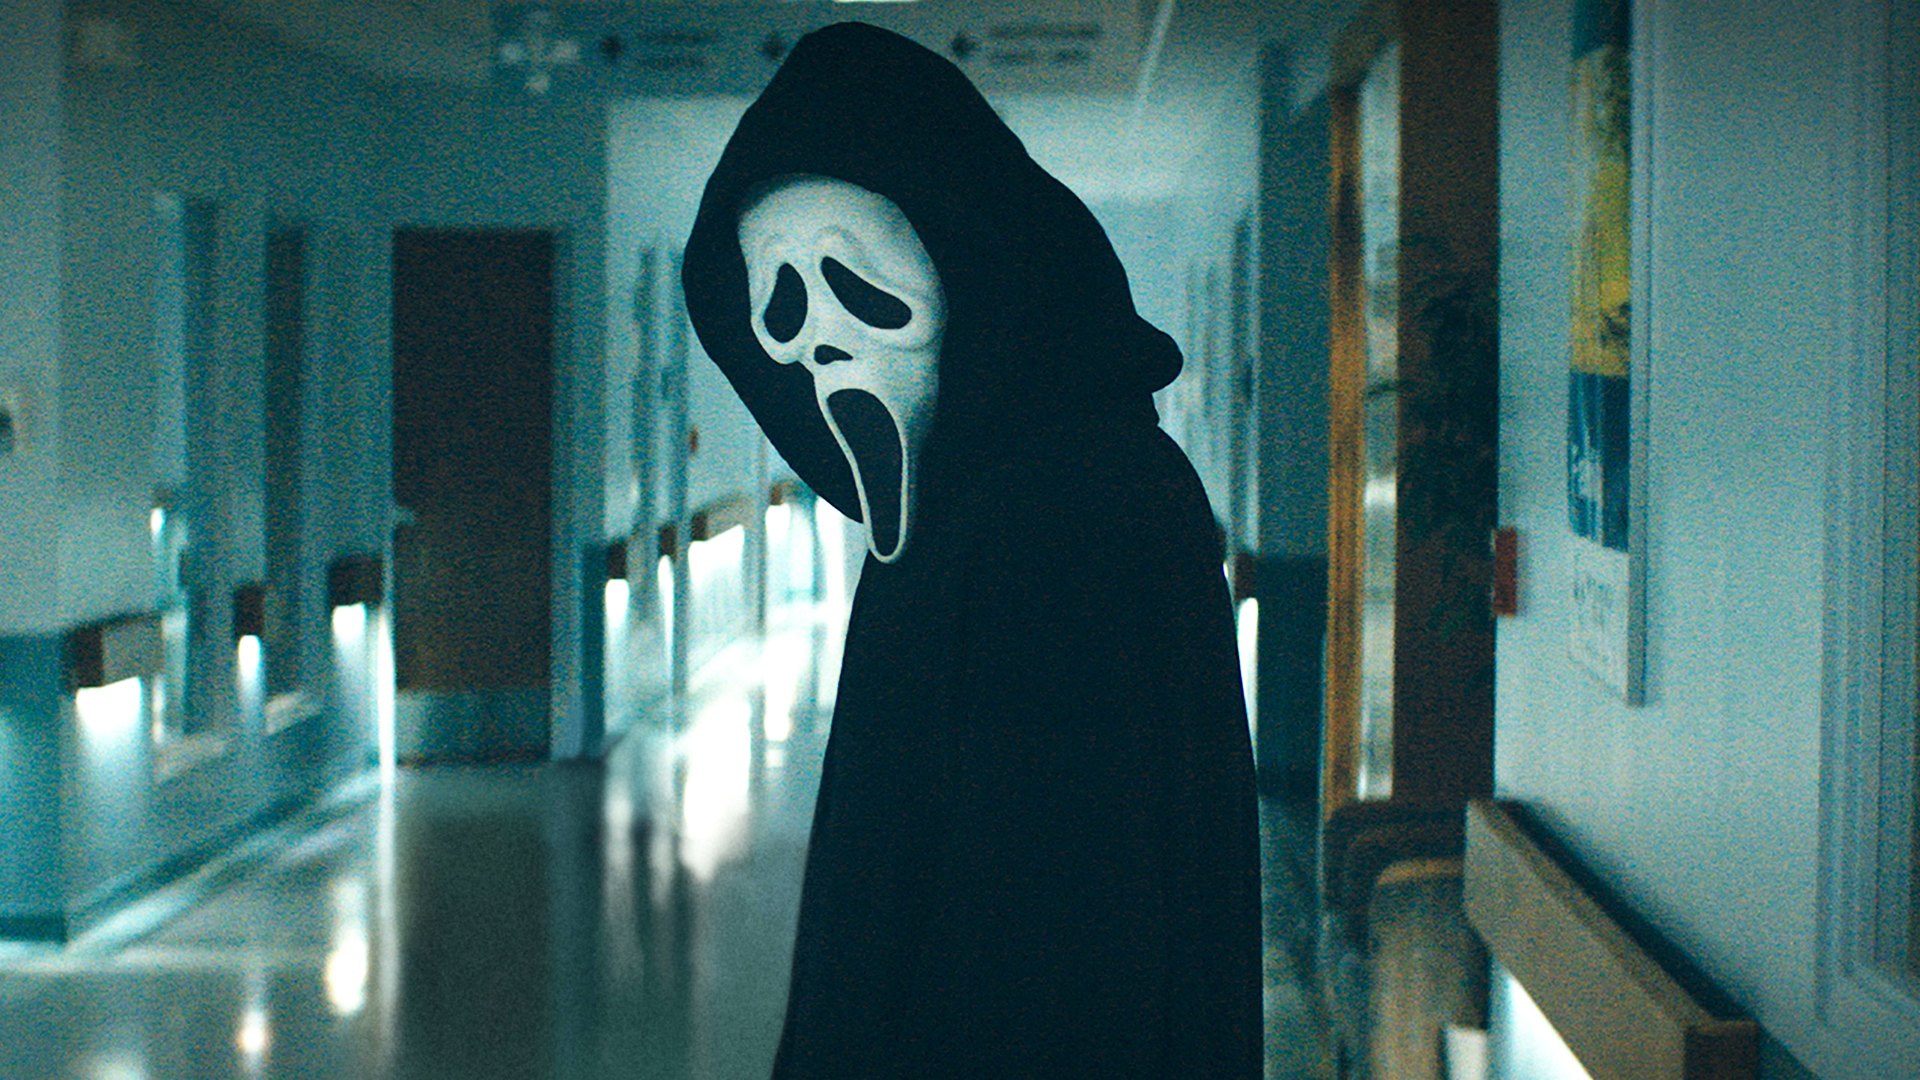 Scream 6: Release Date, Trailer, Cast, Plot Leaks and Rumors